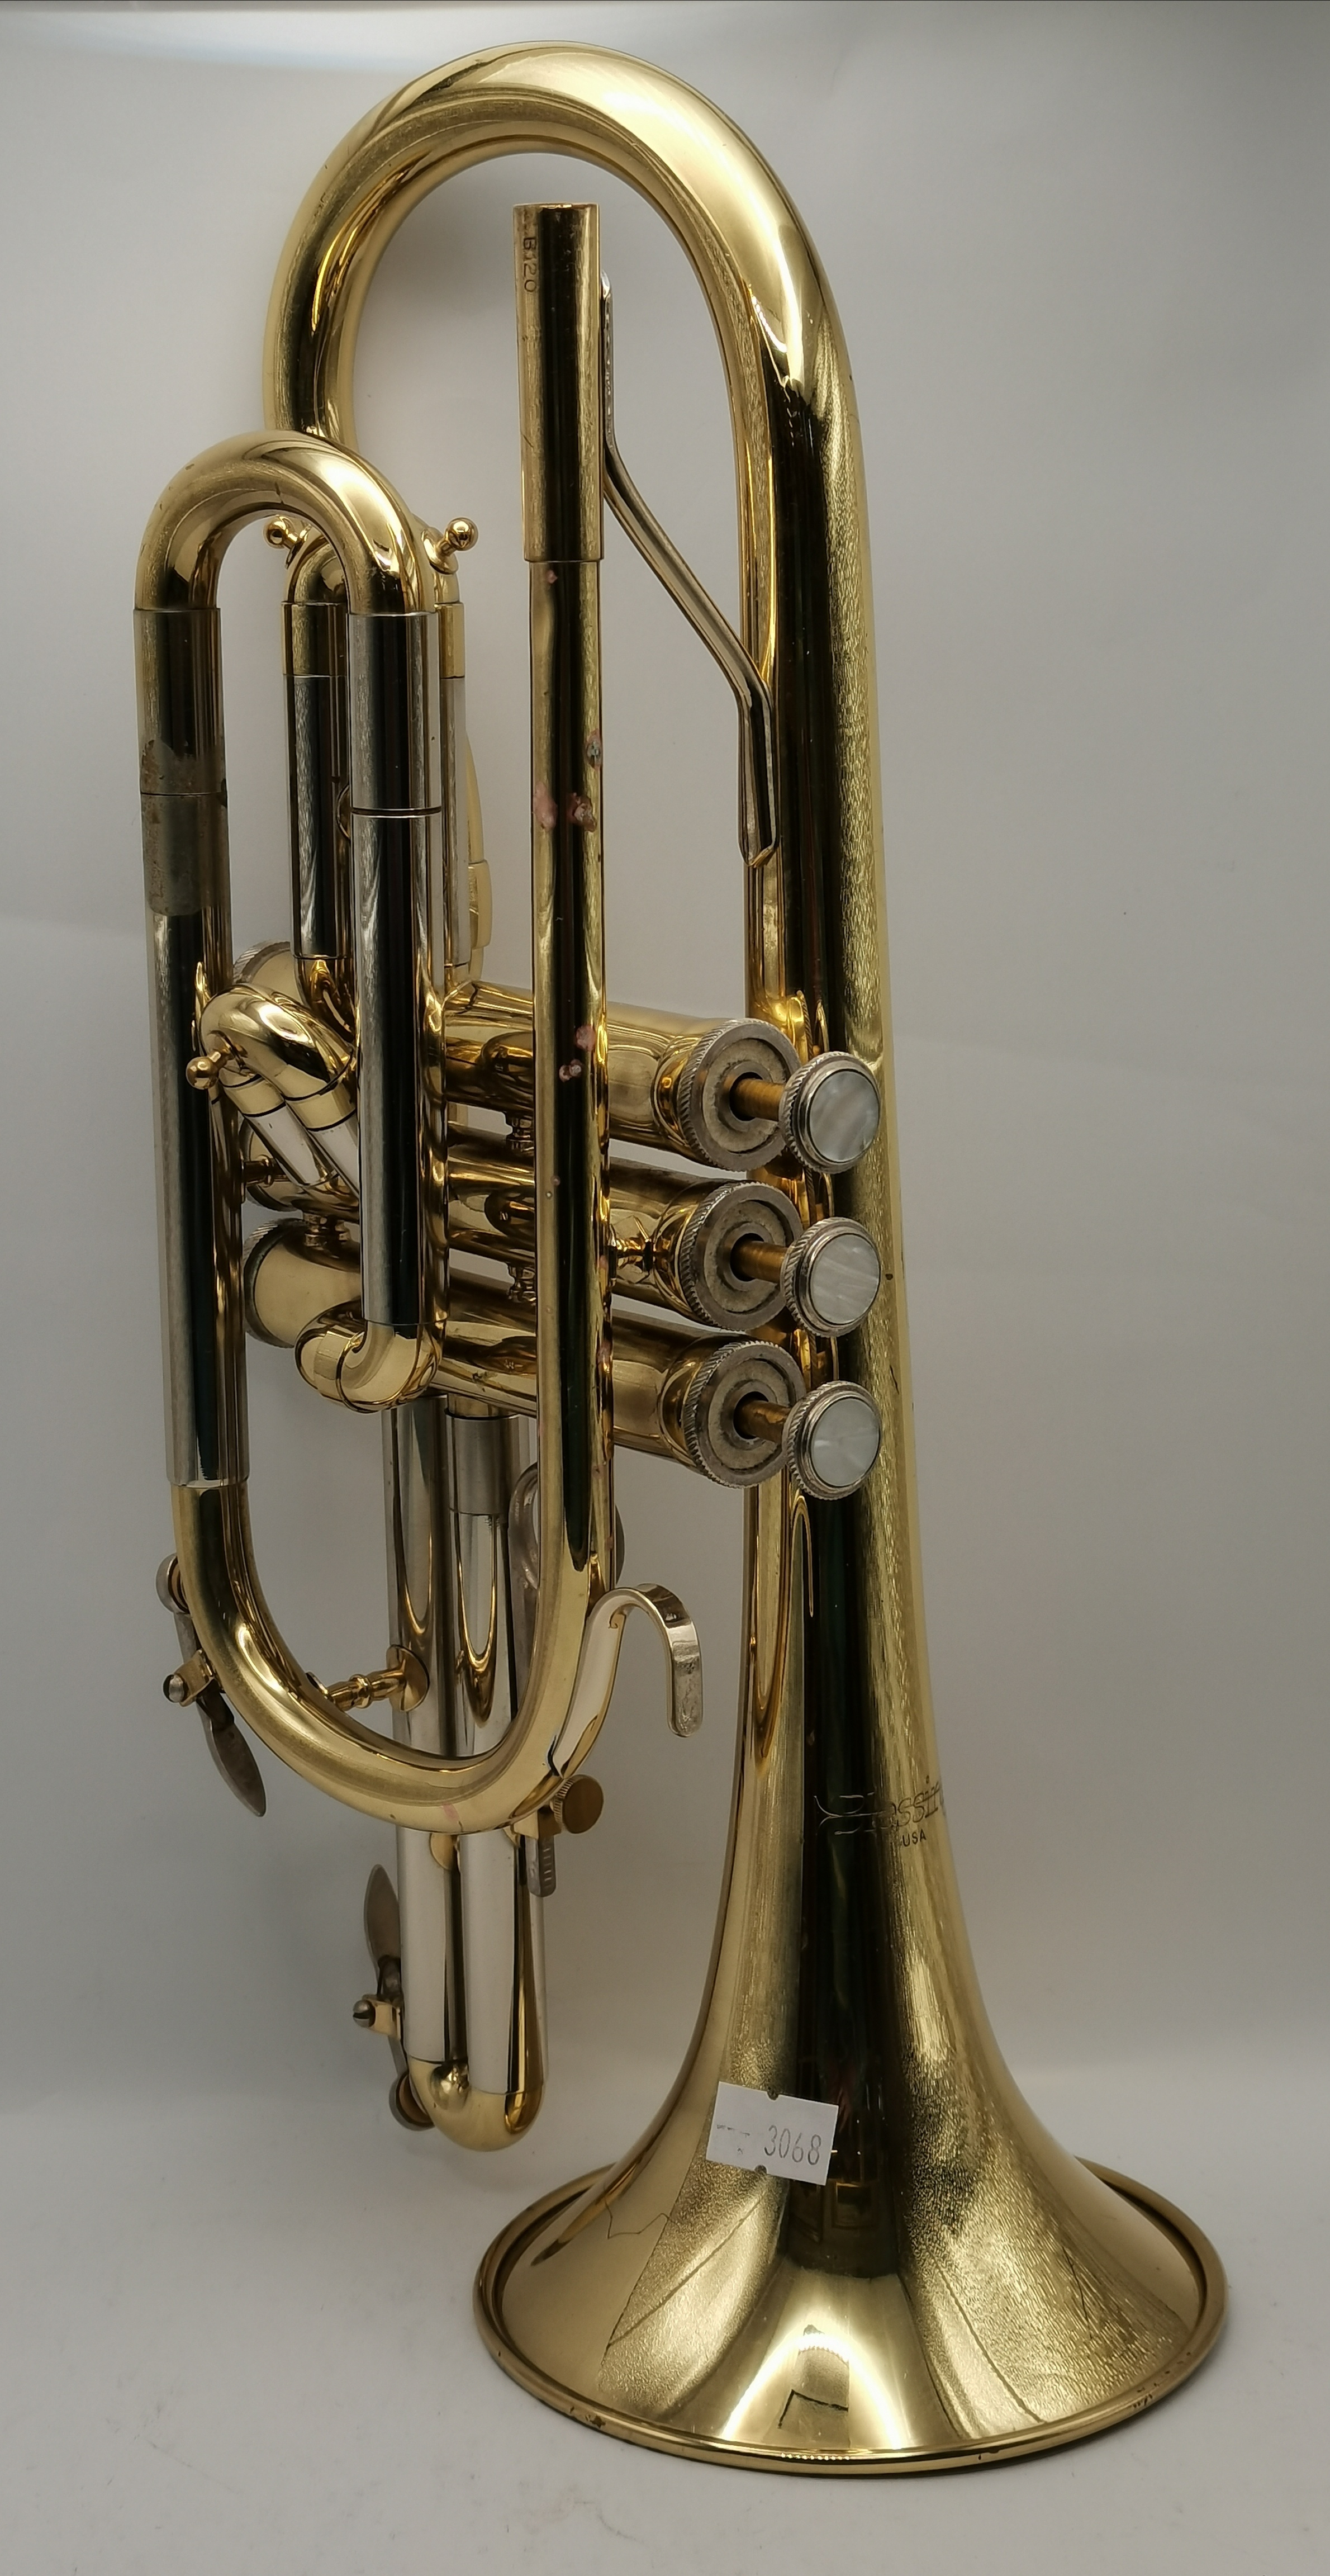 A Blessing USA B120 cornet - Image 2 of 2